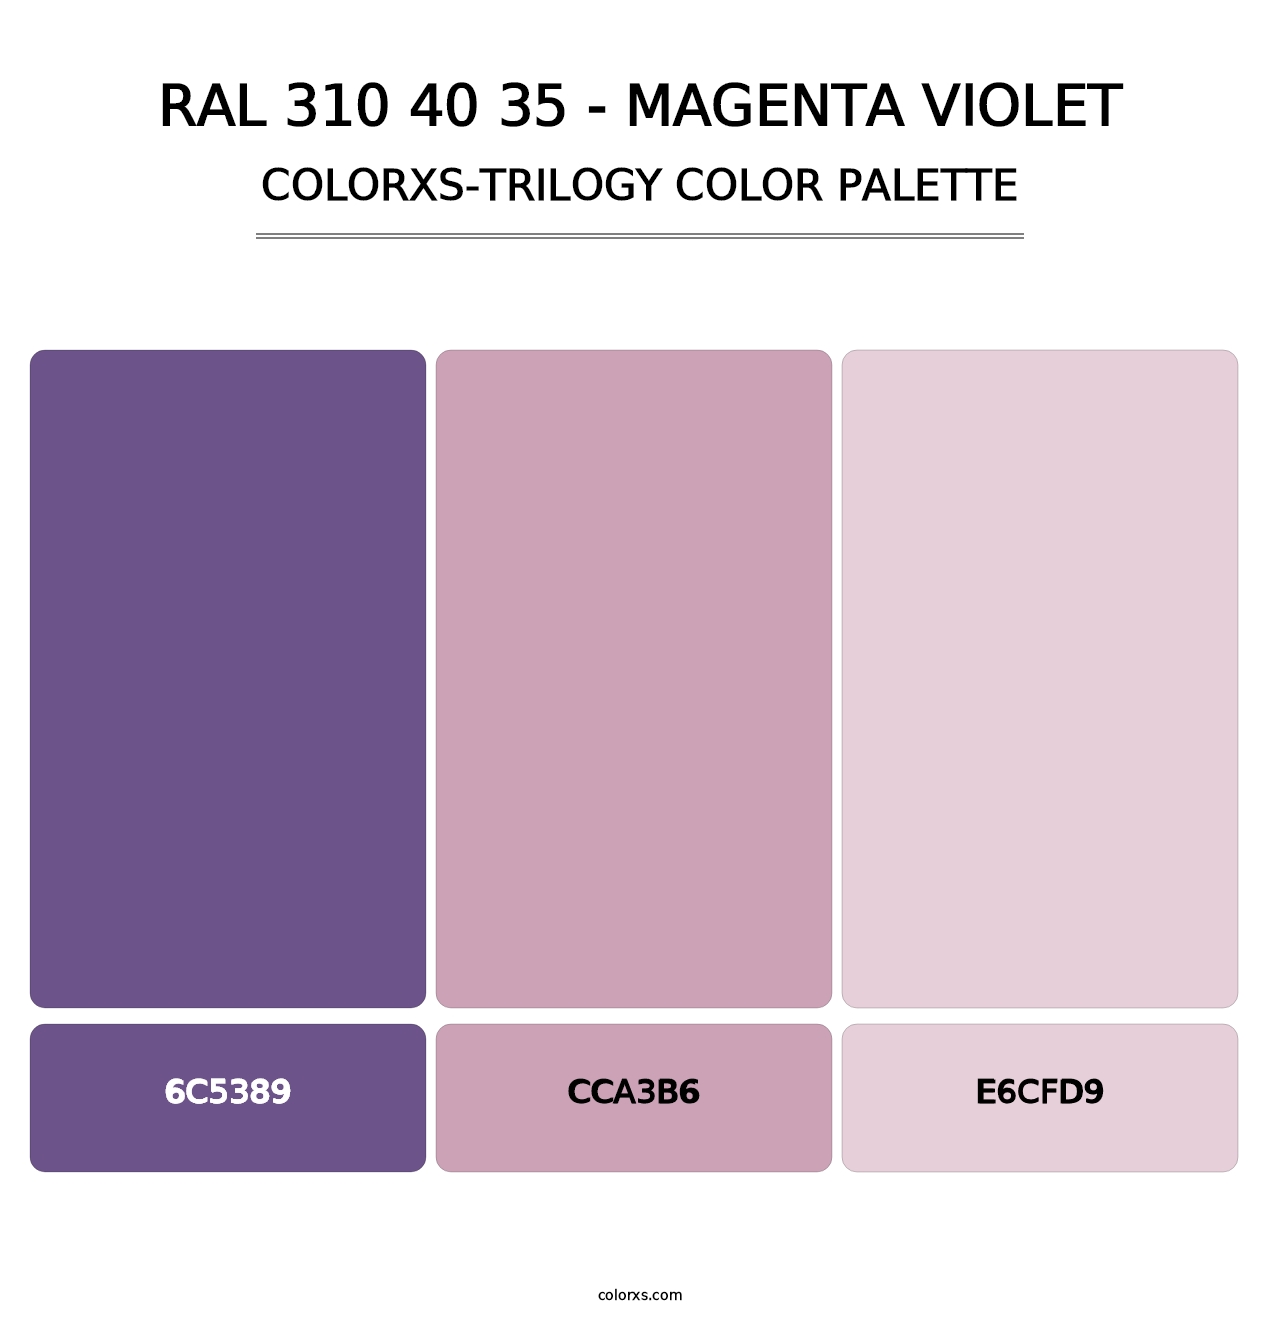 RAL 310 40 35 - Magenta Violet - Colorxs Trilogy Palette